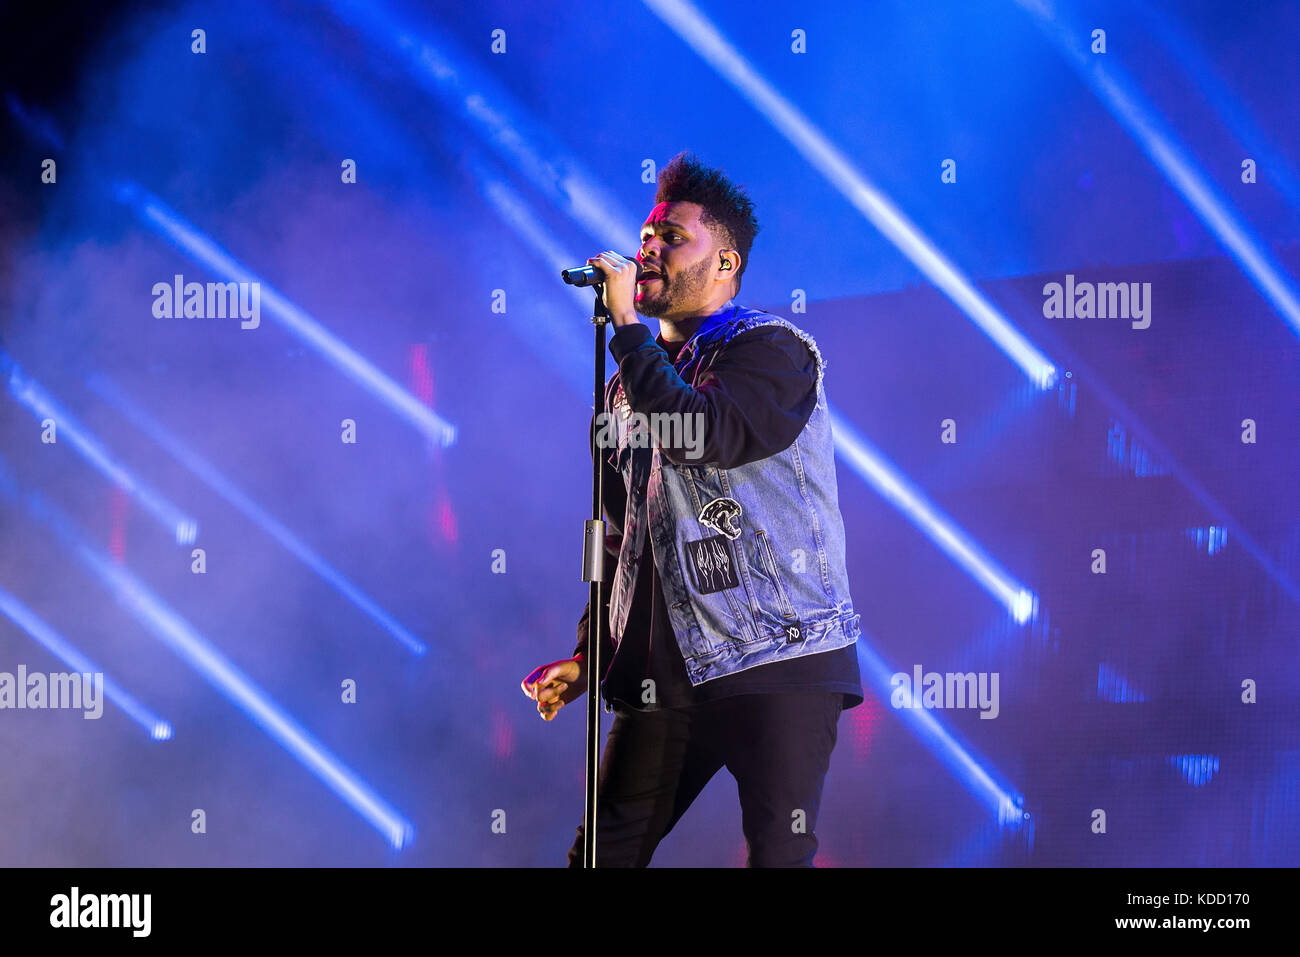 BENICASSIM, ESPAGNE - 13 juil : Le rhythm and blues (The Weeknd music band) produisent en concert au Festival le 13 juillet 2017 à Benicassim, Espagne. Banque D'Images